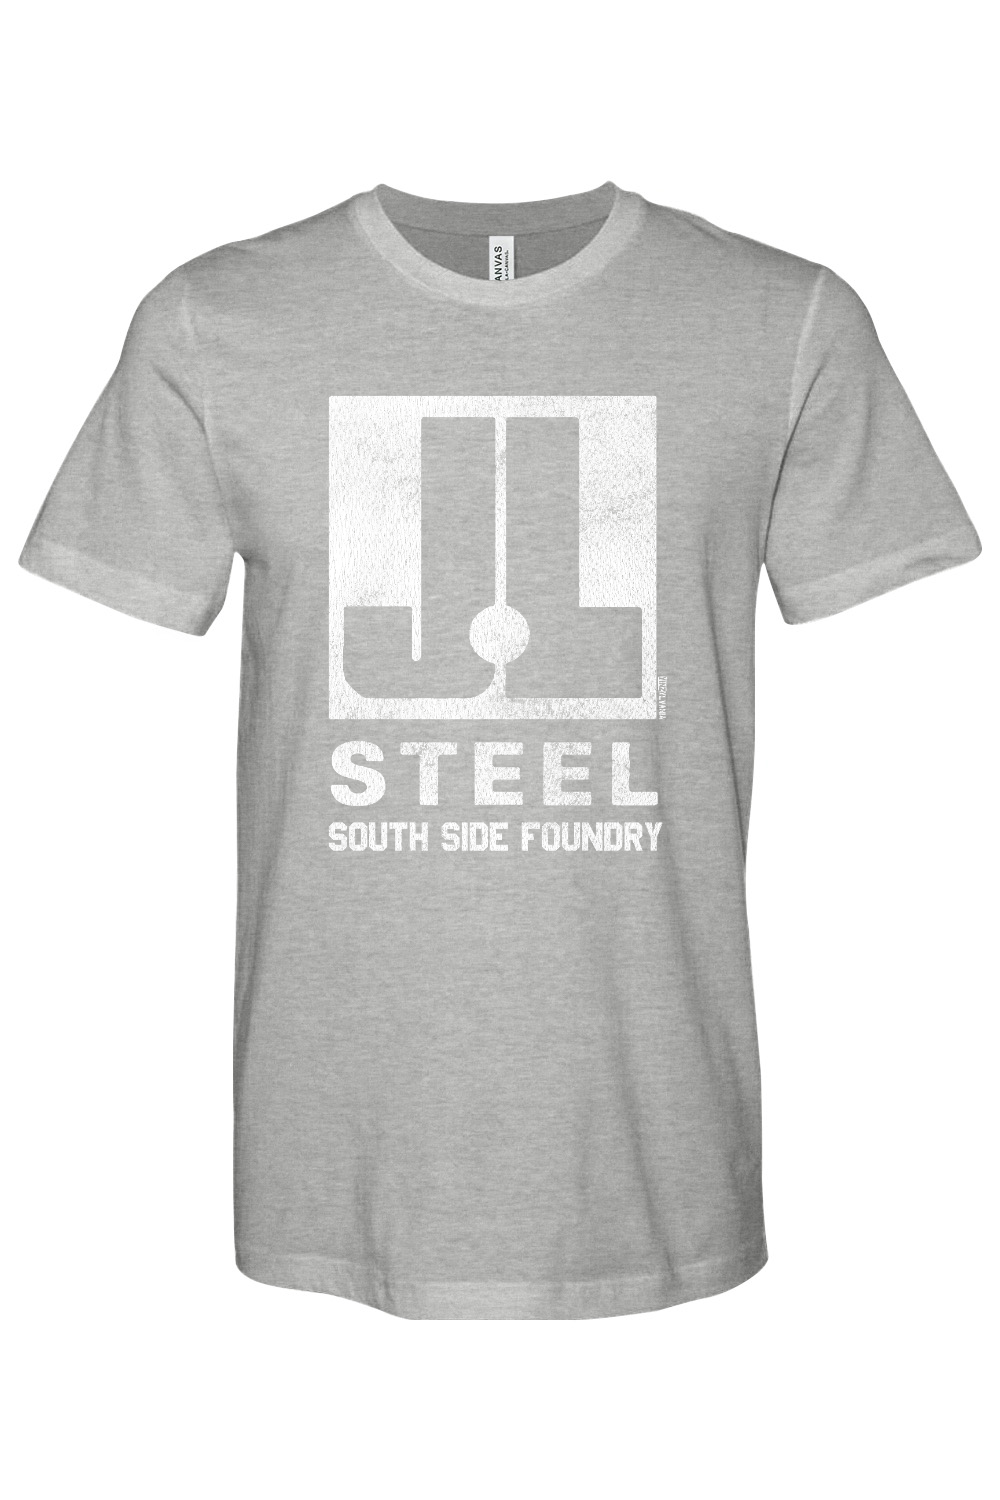 J&L Steel - South Side Foundry - Bella + Canvas Jersey Tee - Yinzylvania